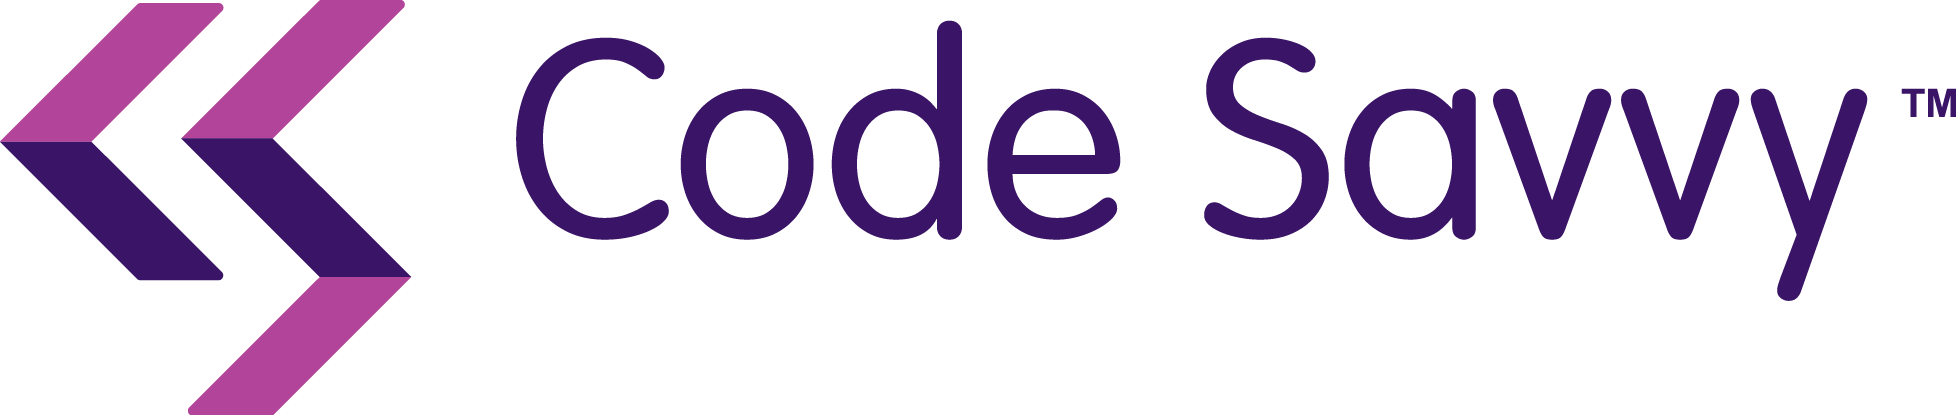 Code Savvy logo